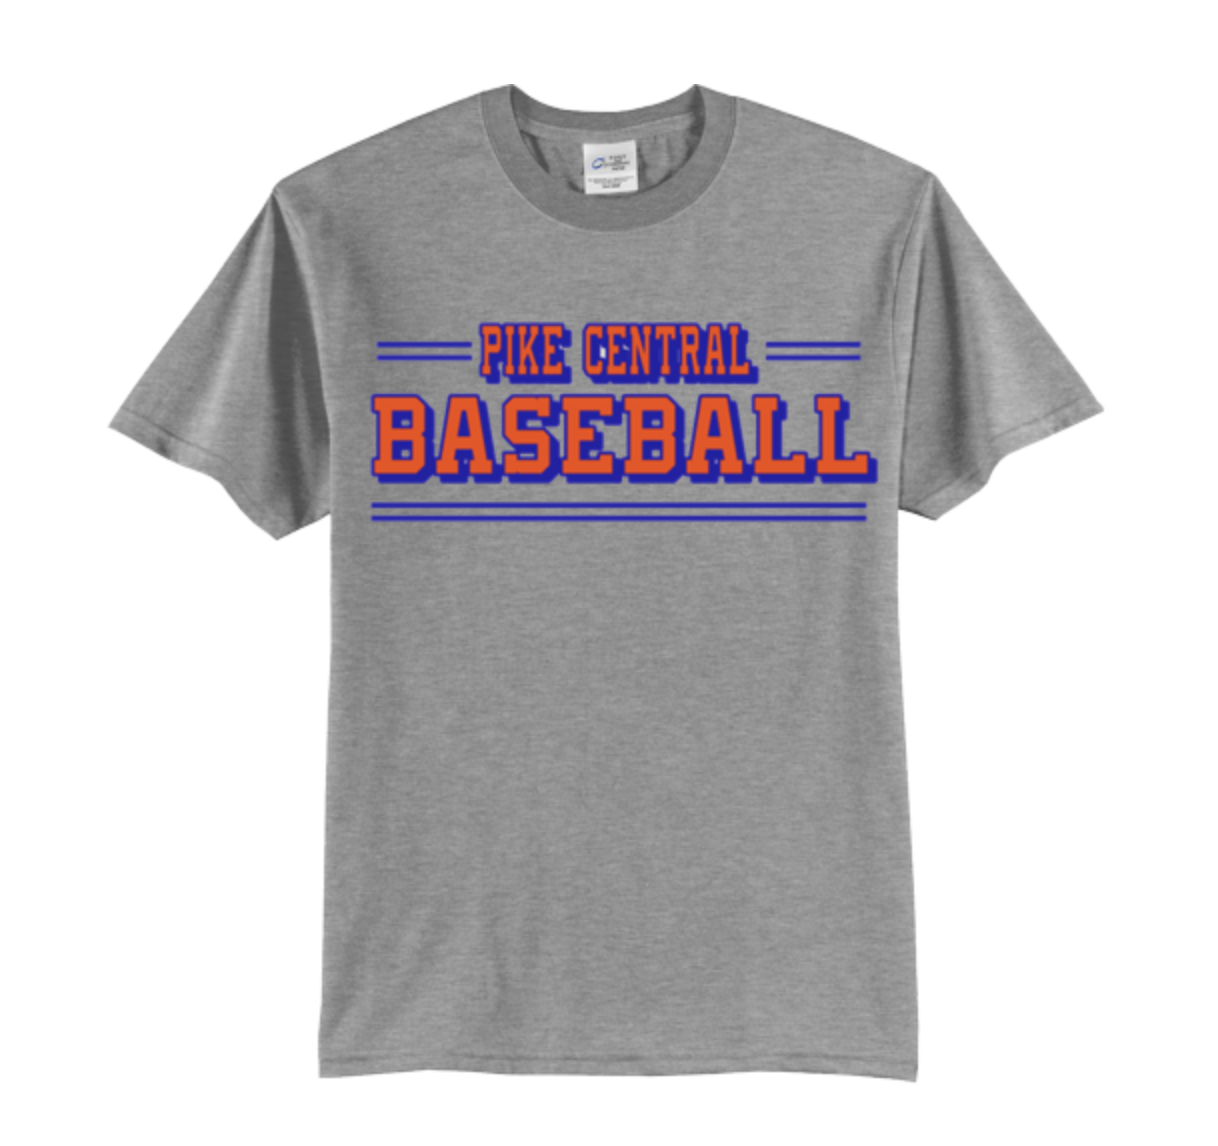 Pike Central Baseball Shirt